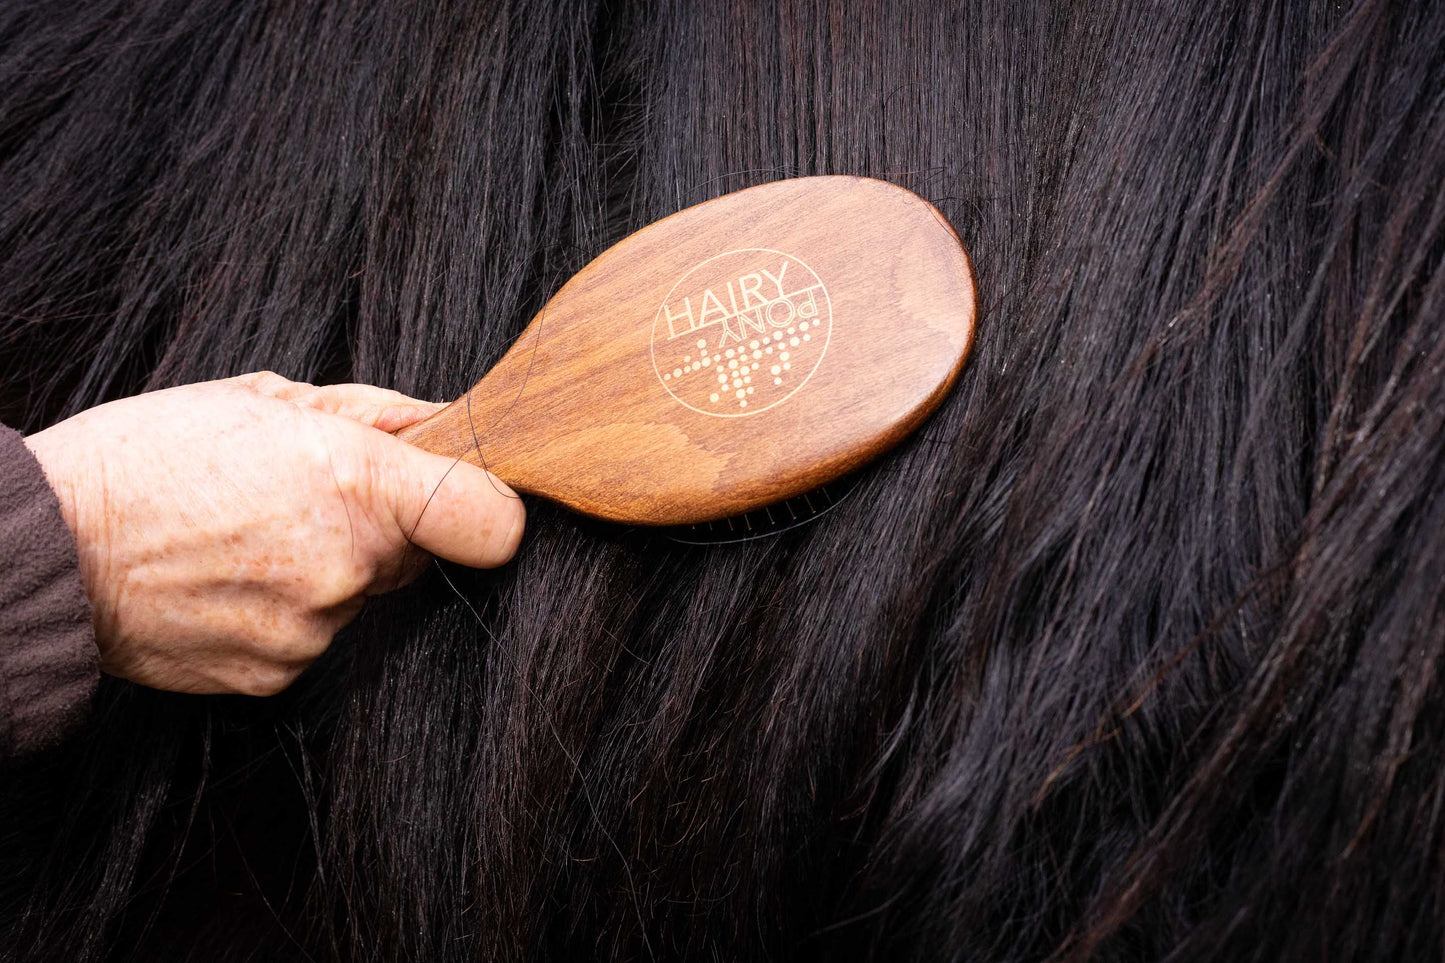 Hairy Pony Mane & Tail Brush